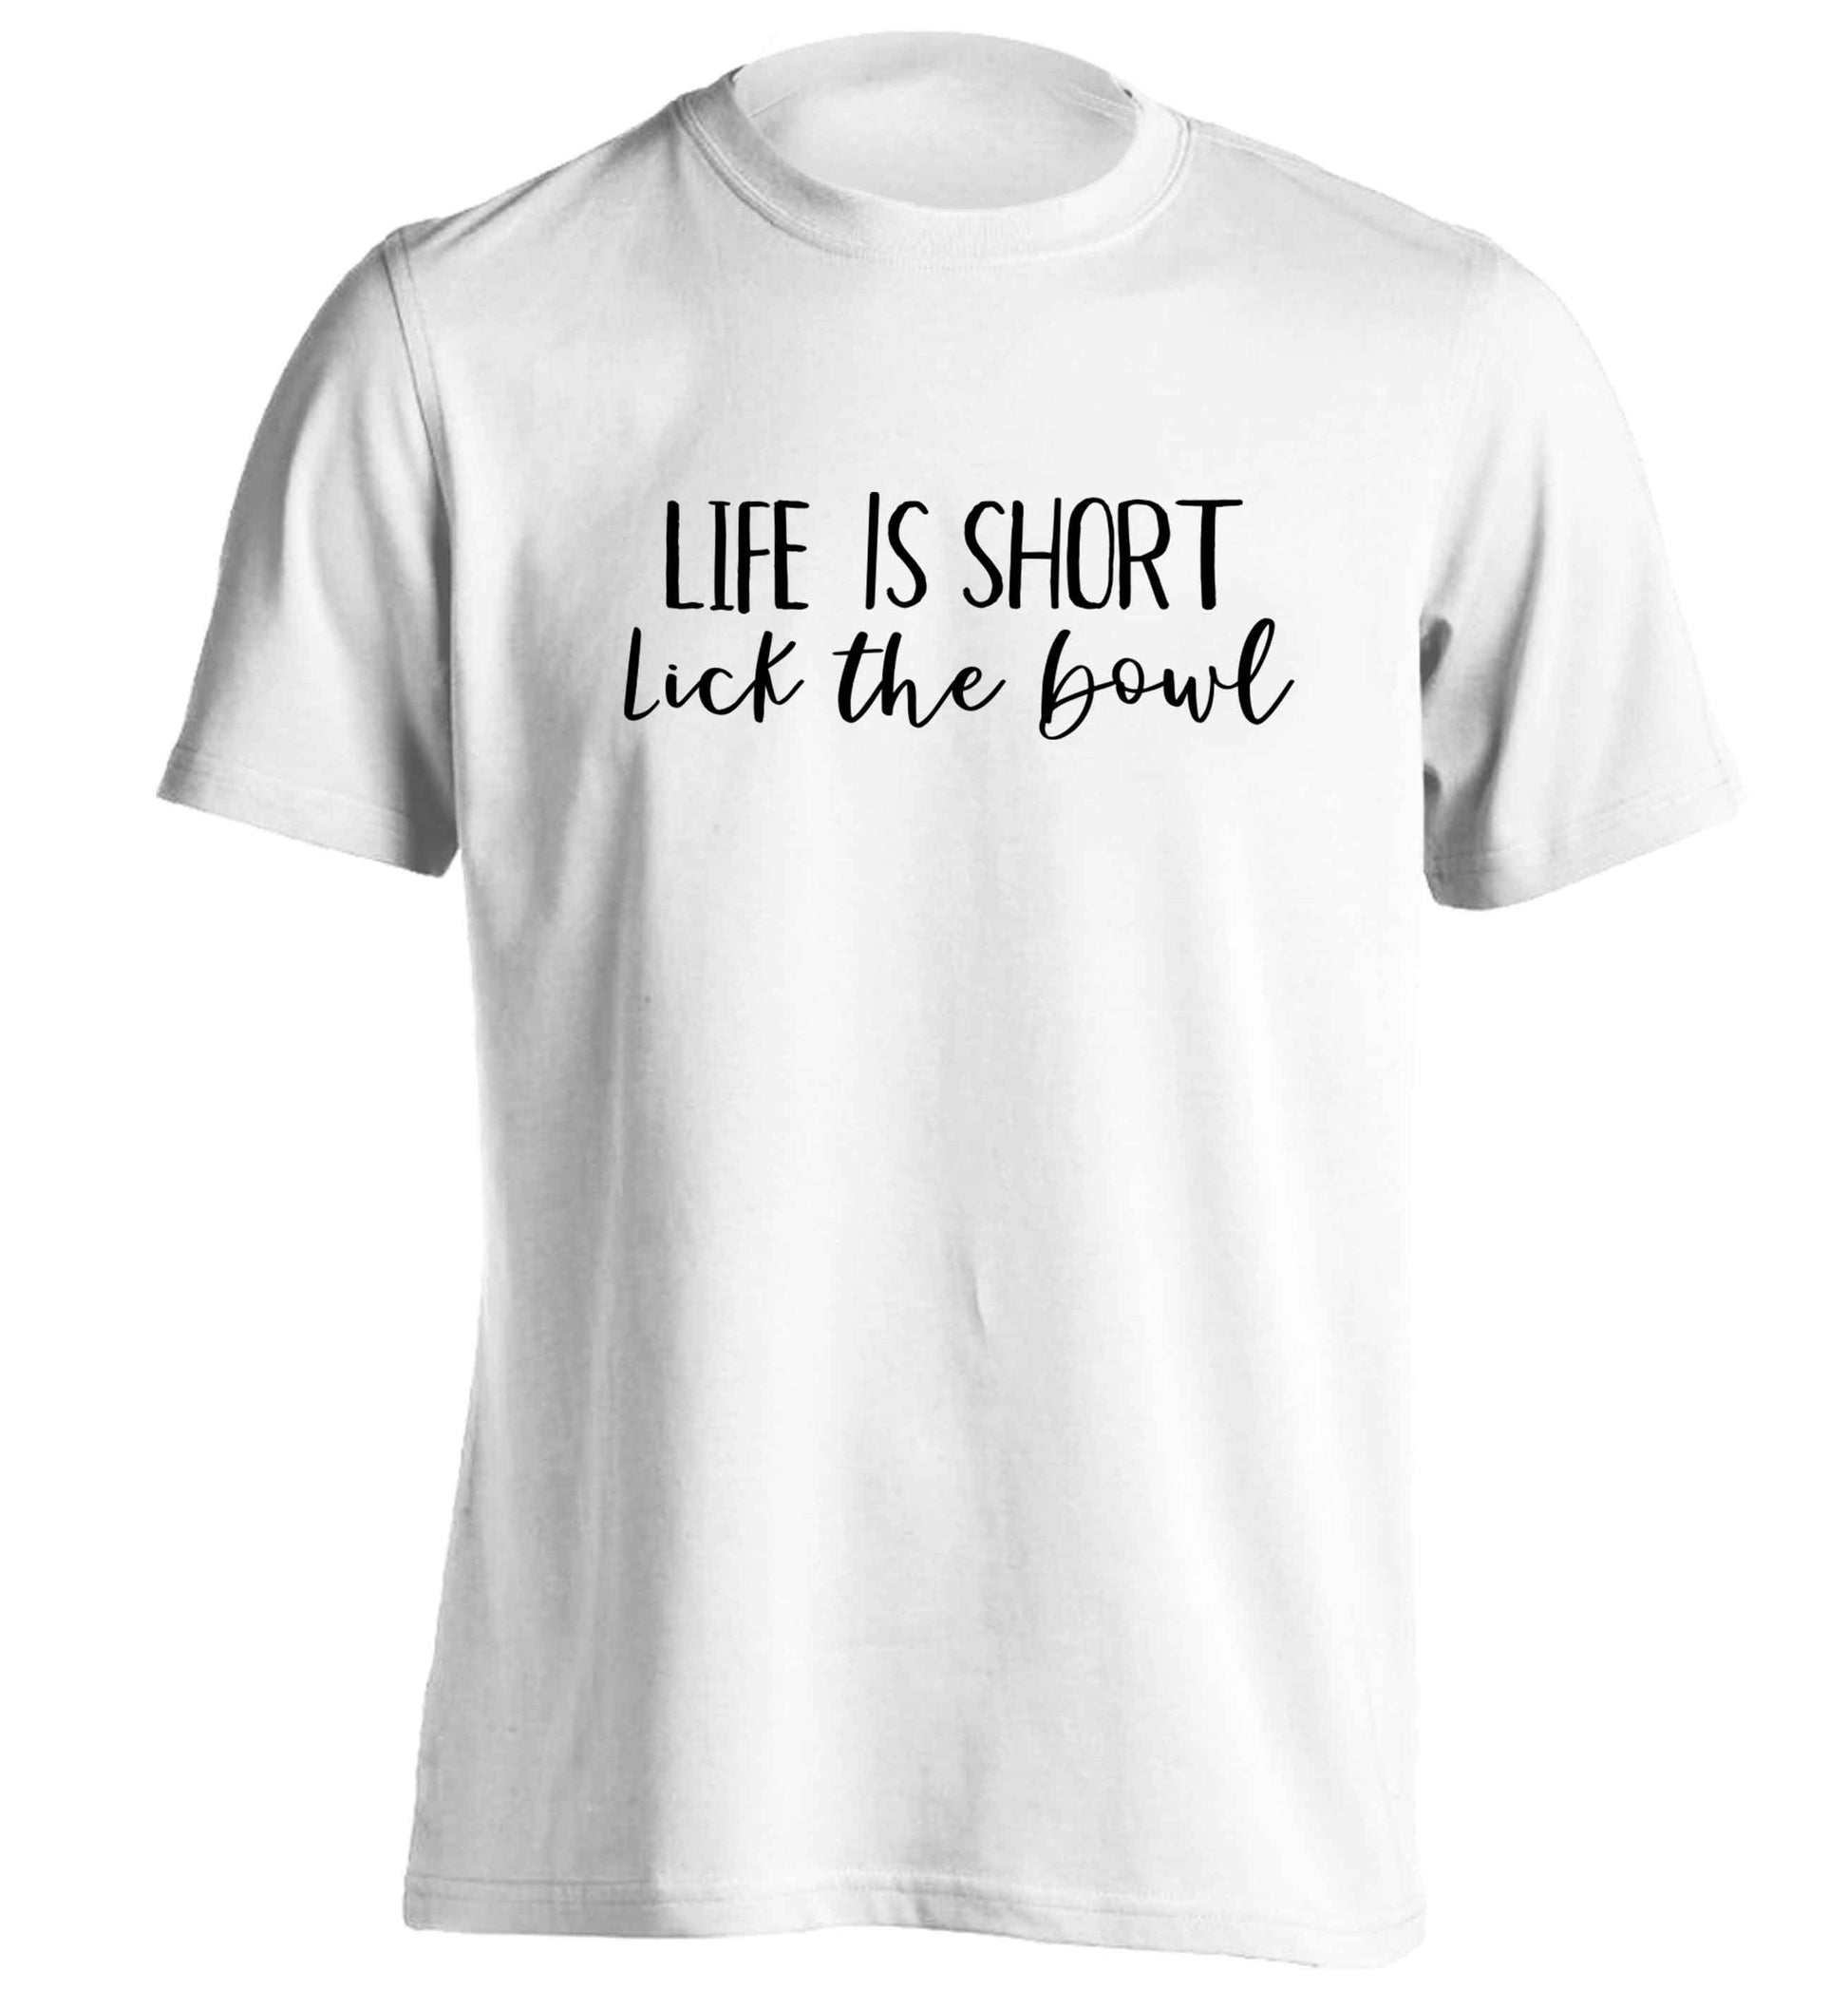 Life is short lick the bowl adults unisex white Tshirt 2XL